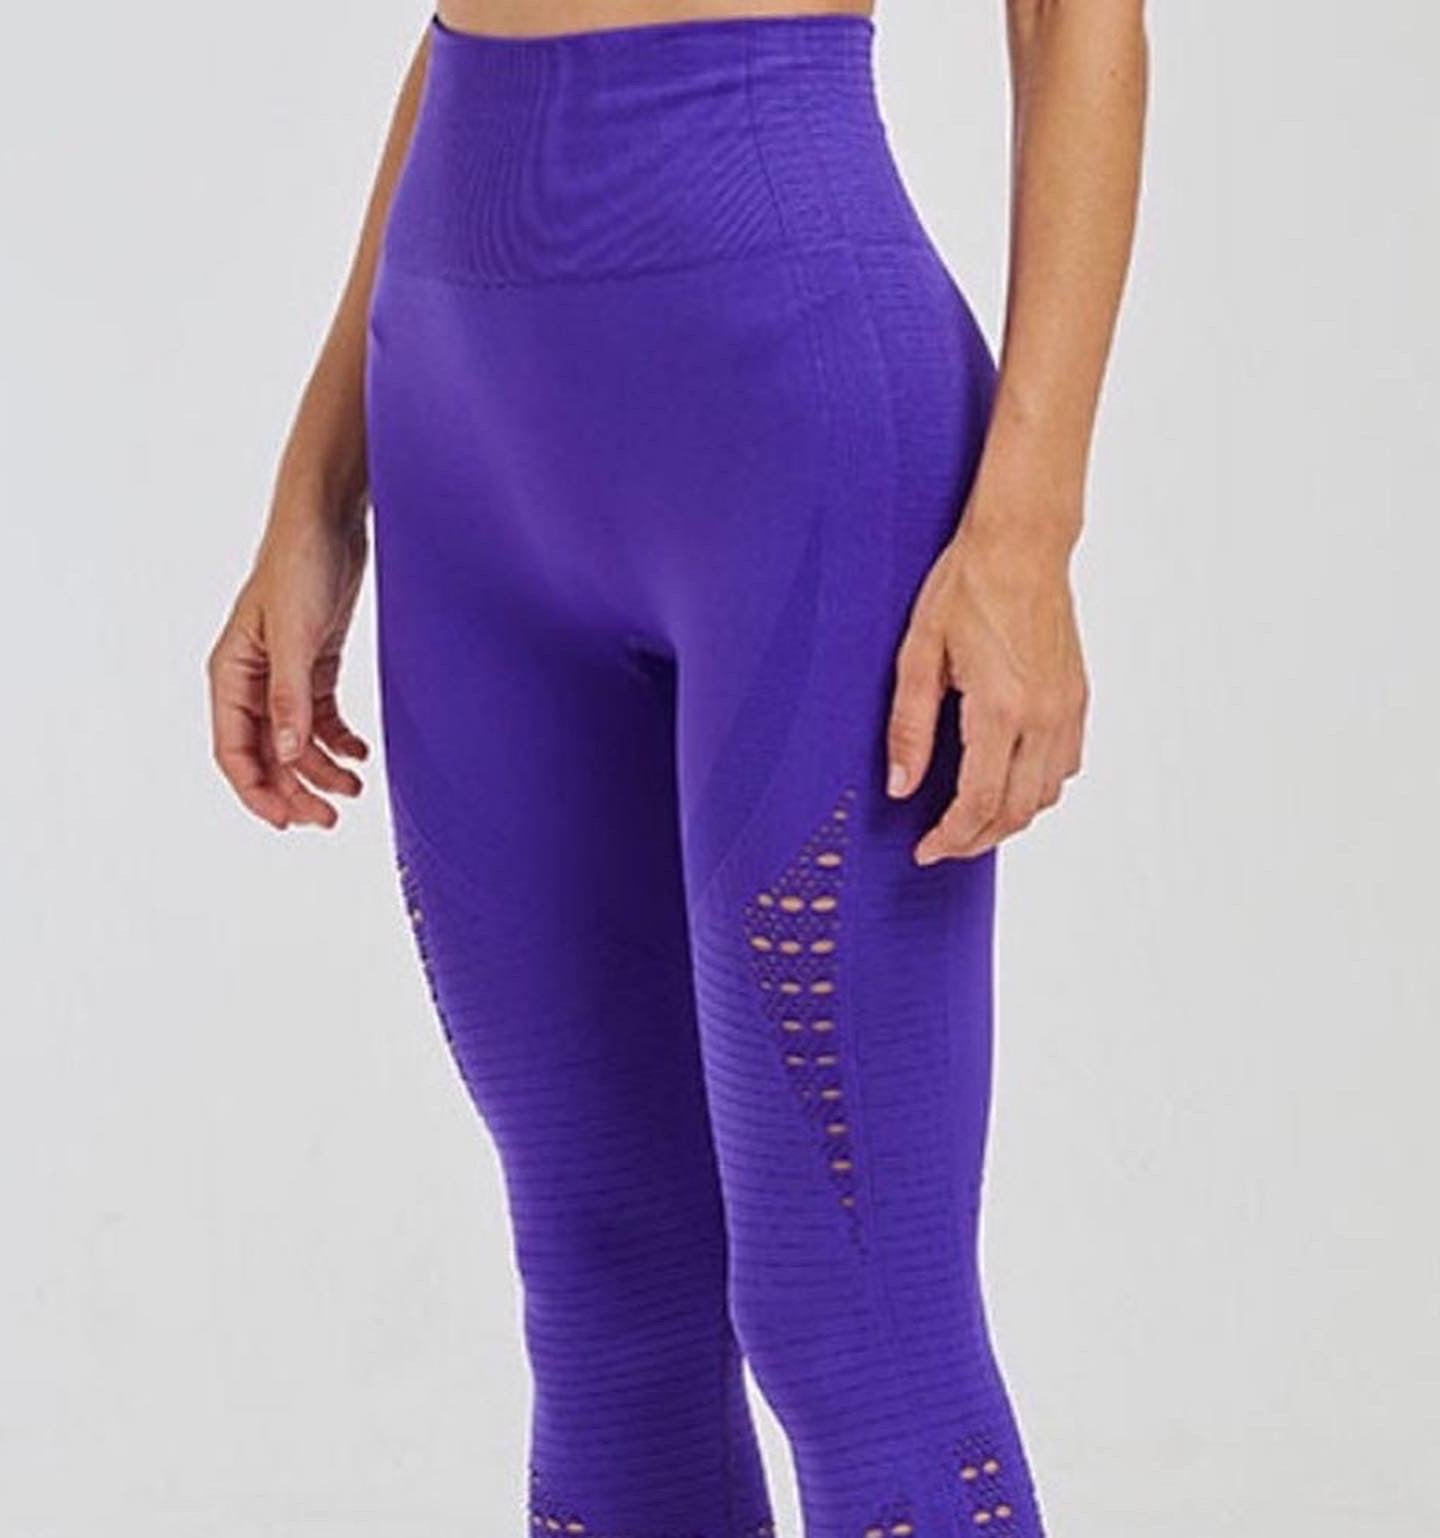 Kica Active - Own it #FreeToBe. Purple lake leggings & Purple Lake